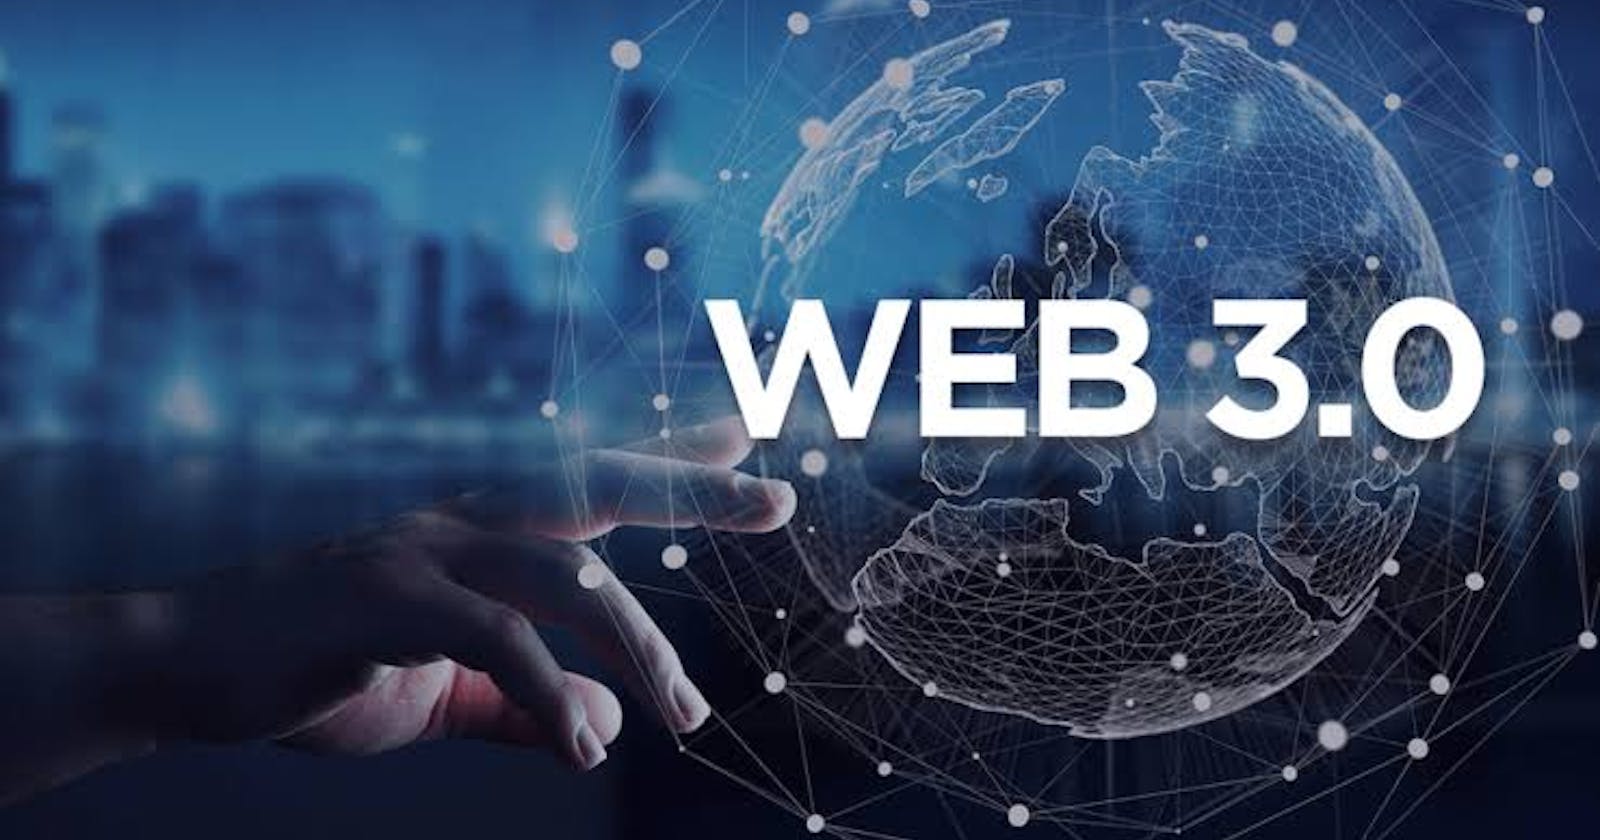 Web 3.0 | The future of the Internet